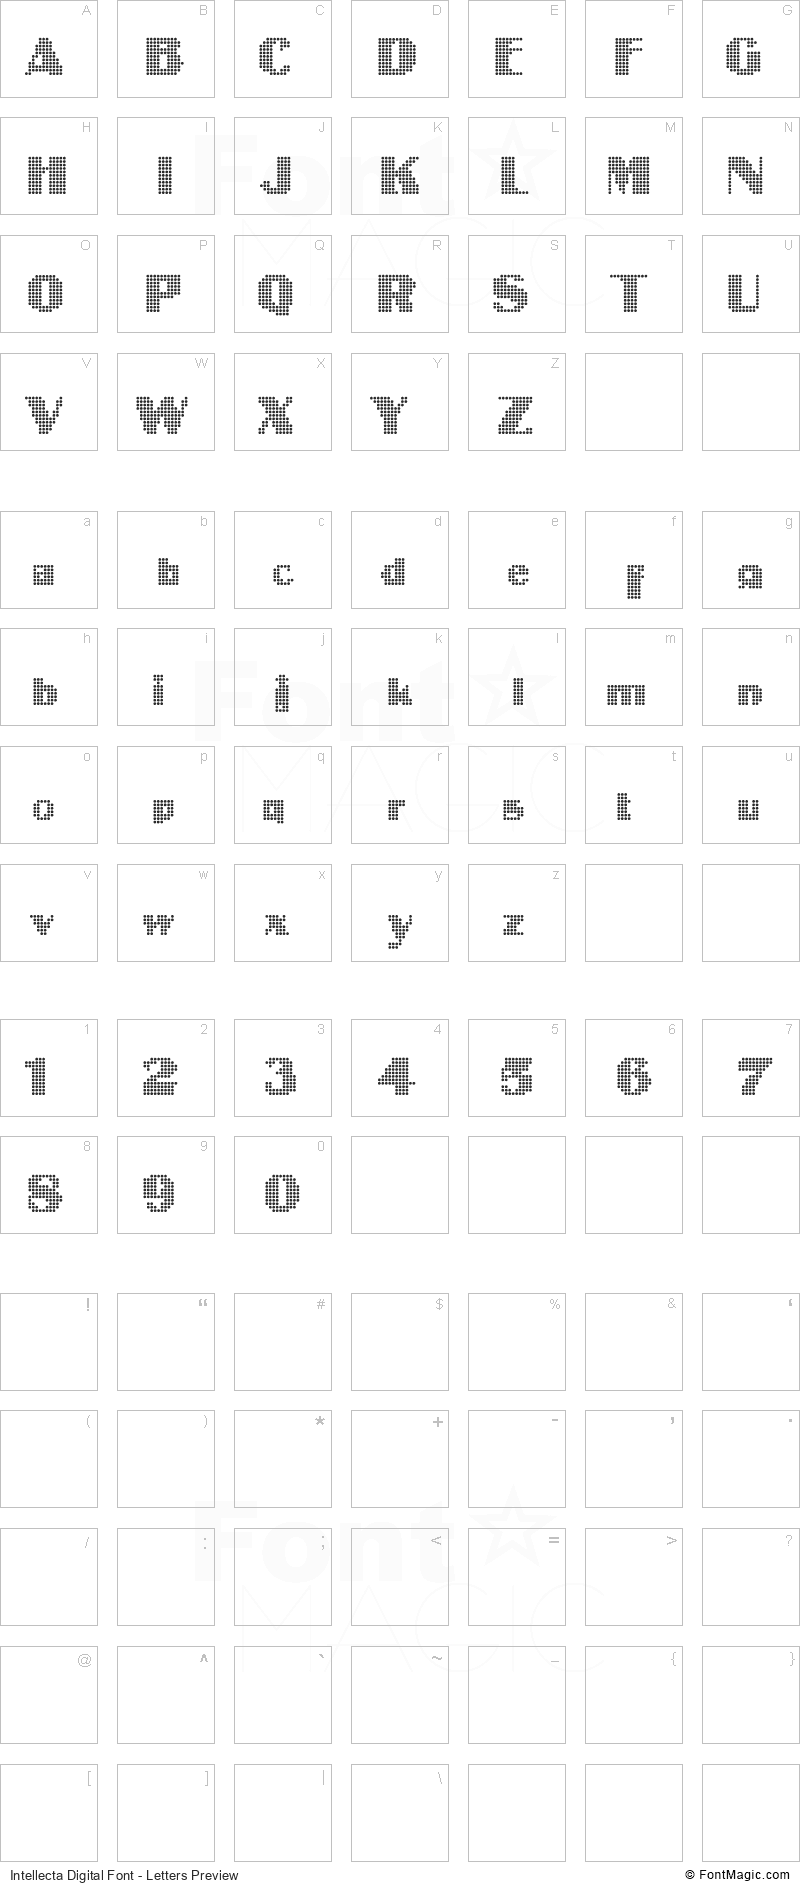 Intellecta Digital Font - All Latters Preview Chart